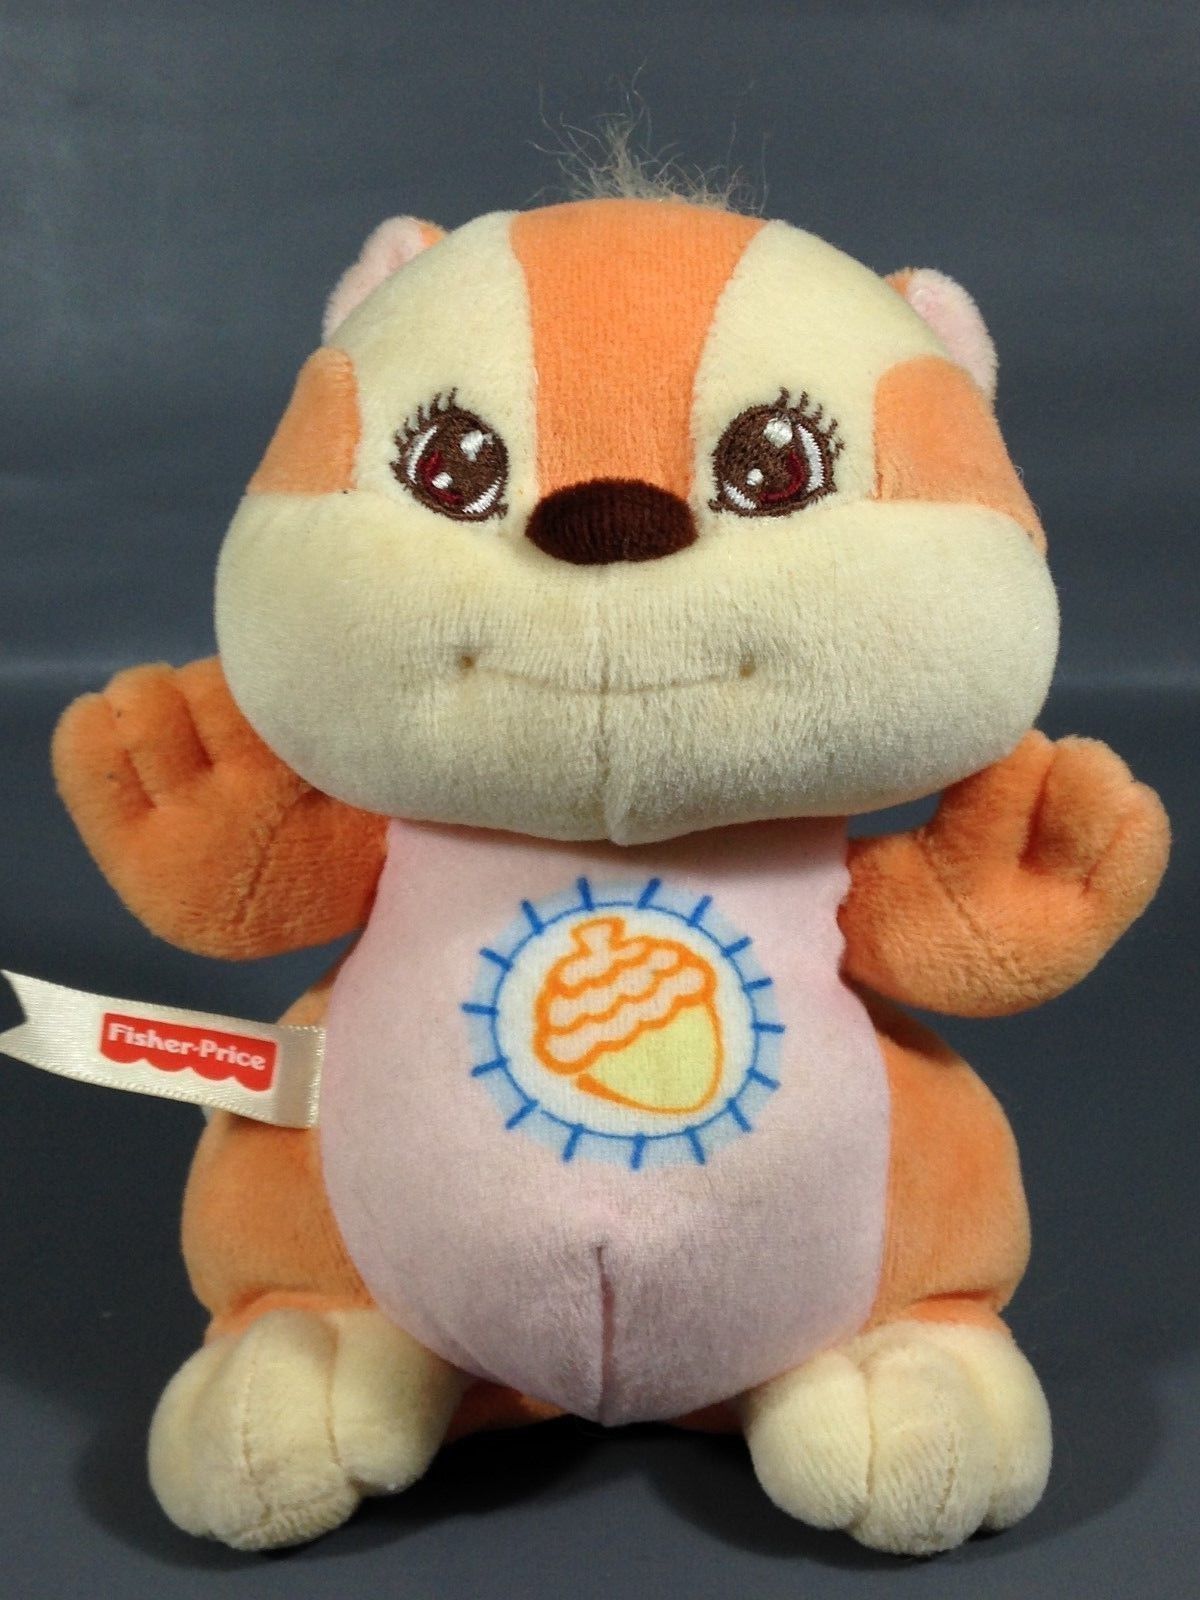 Fisher Price Baby Squirrel Plush Rattle Toy Orange 1998 Stuffed Animal 7" - $14.99